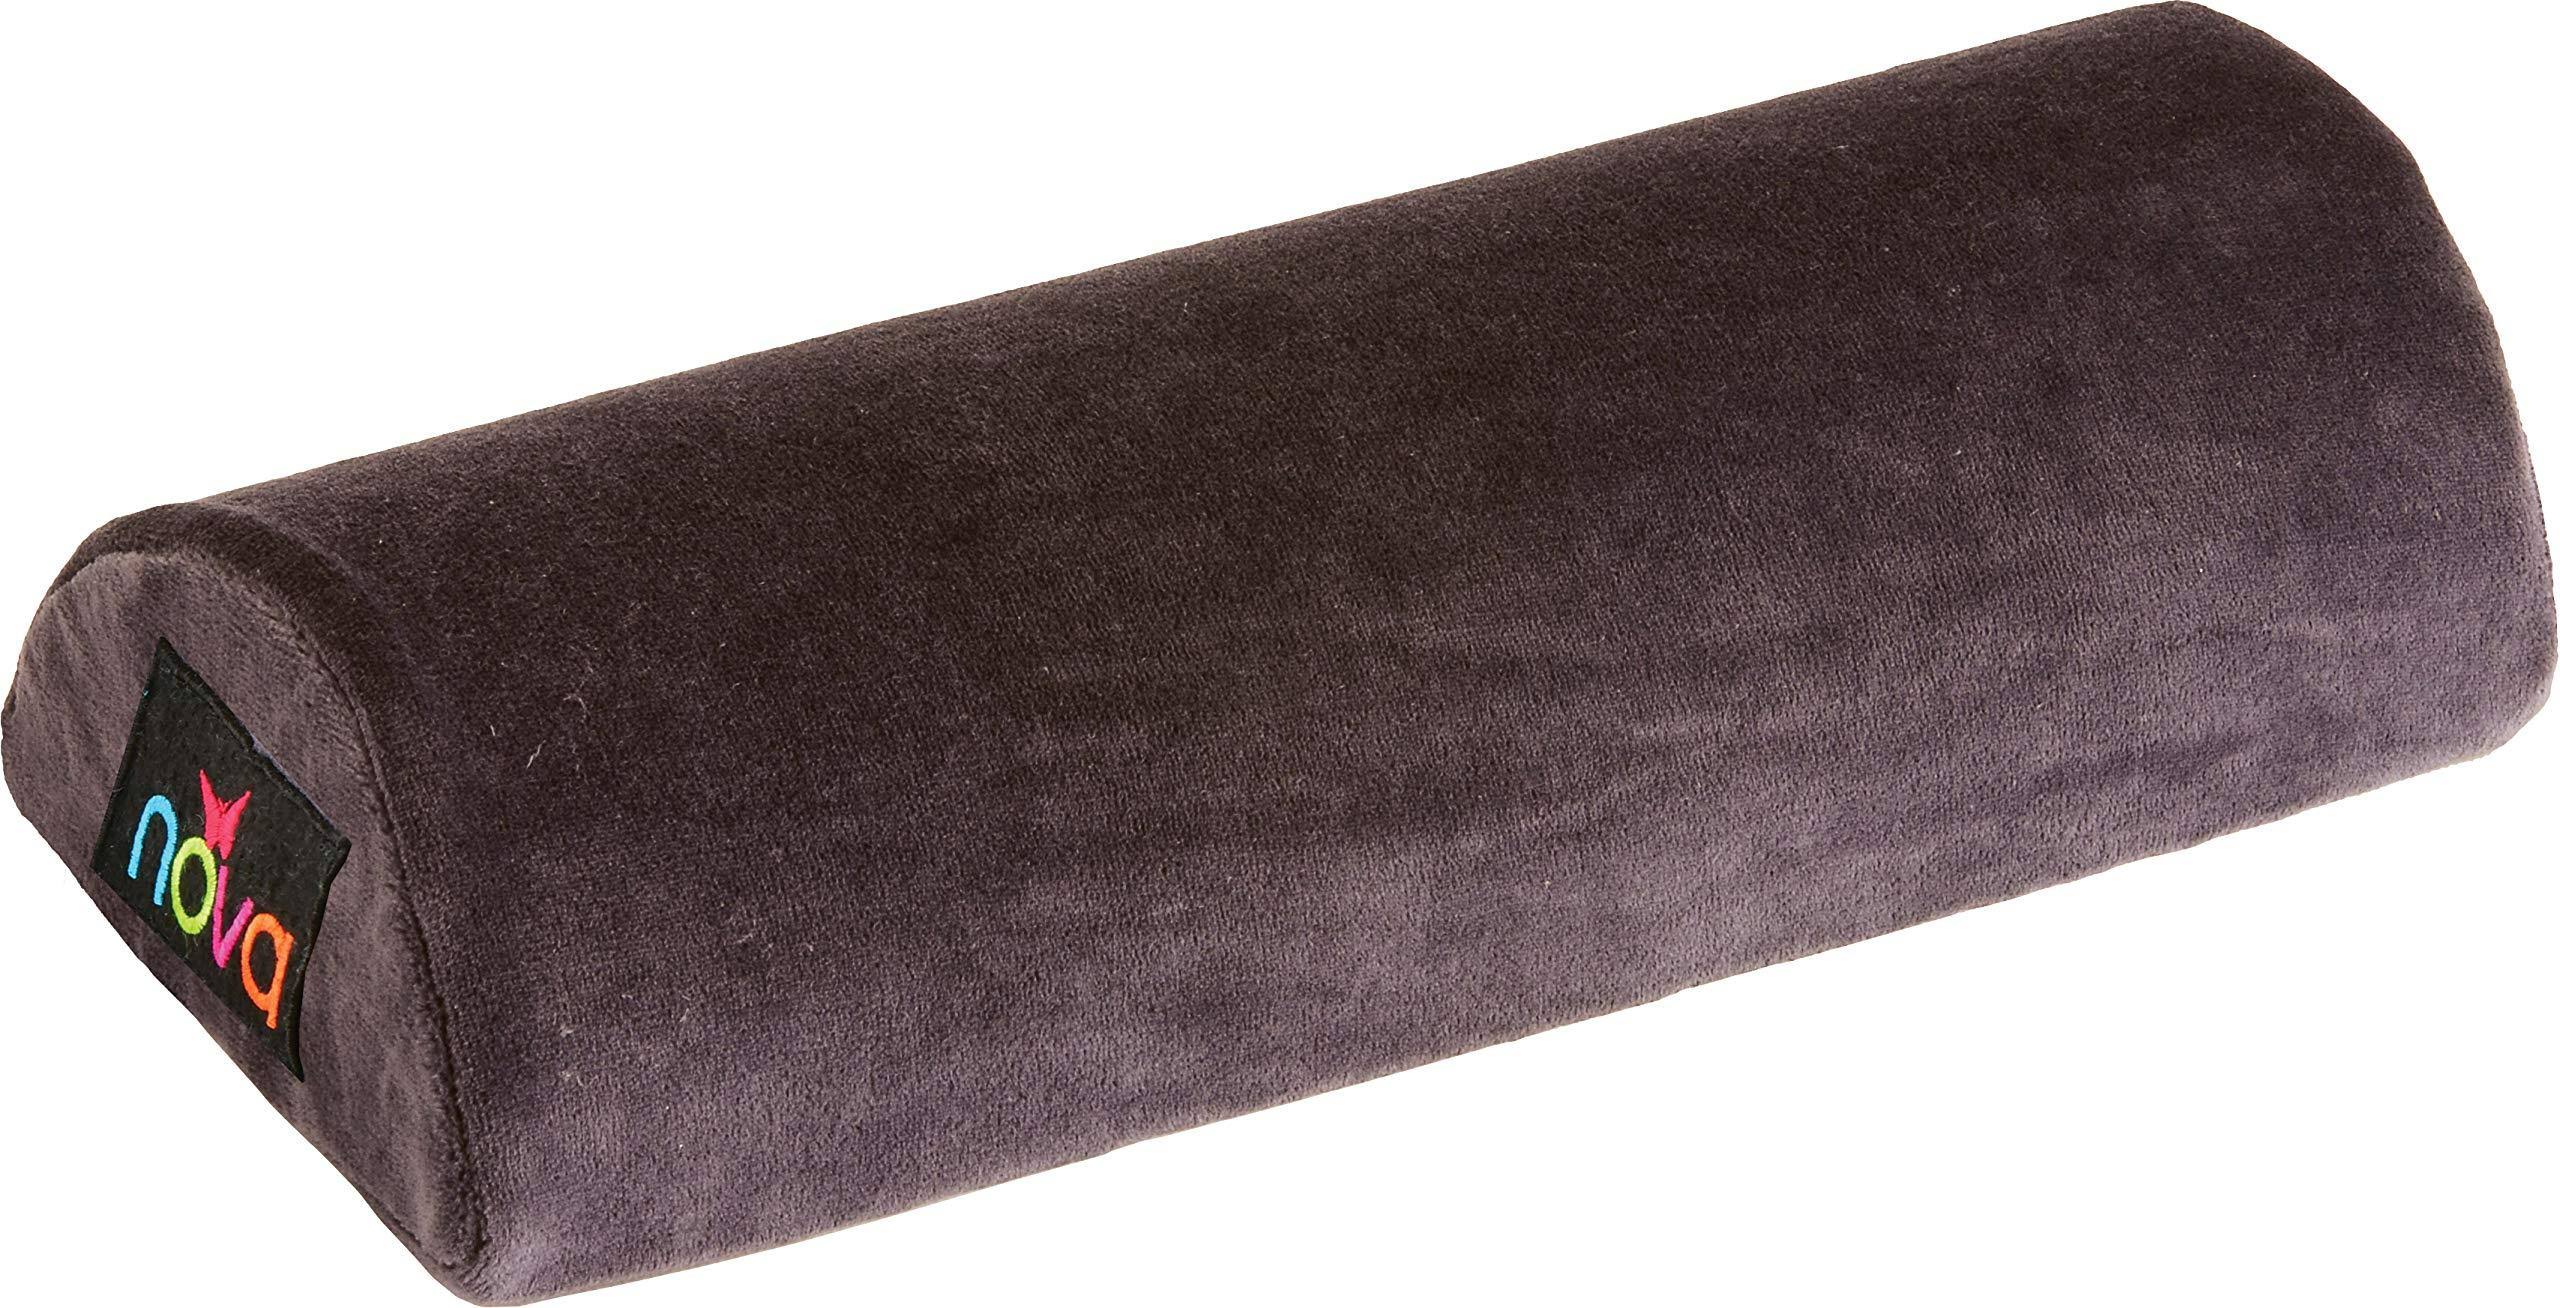 Nova Medical Products Memory Foam Half Roll Pillow - Blue